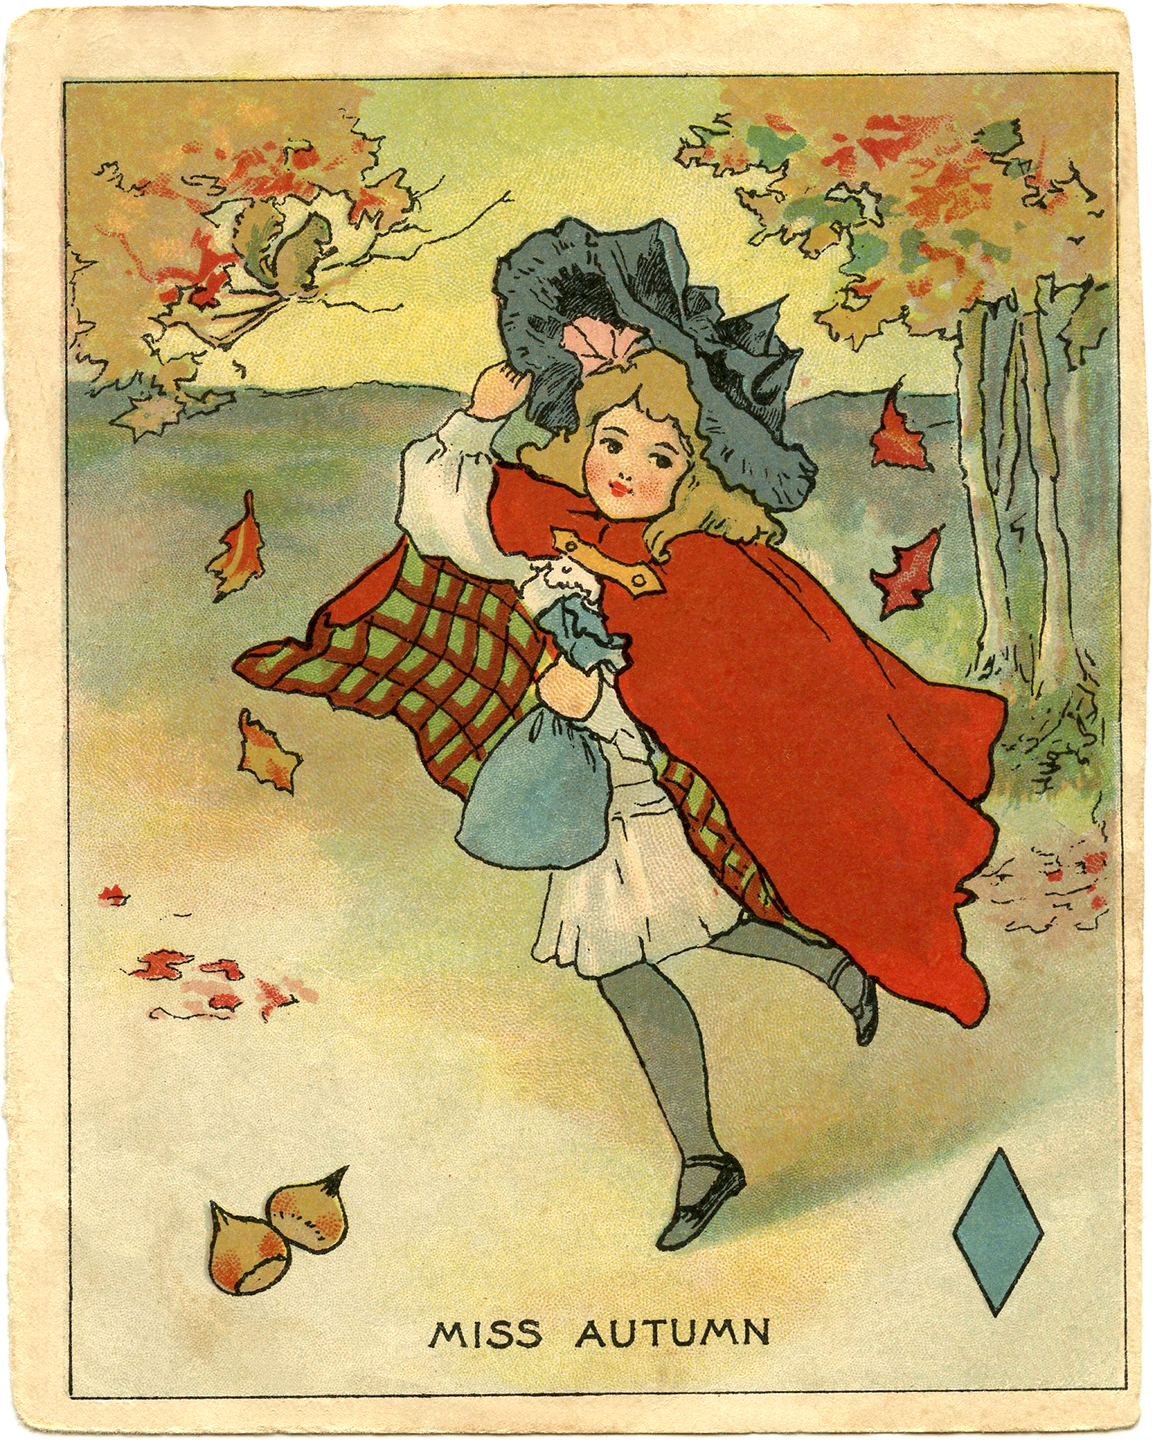 Vintage Clip Art - Miss Autumn - The Graphics Fairy